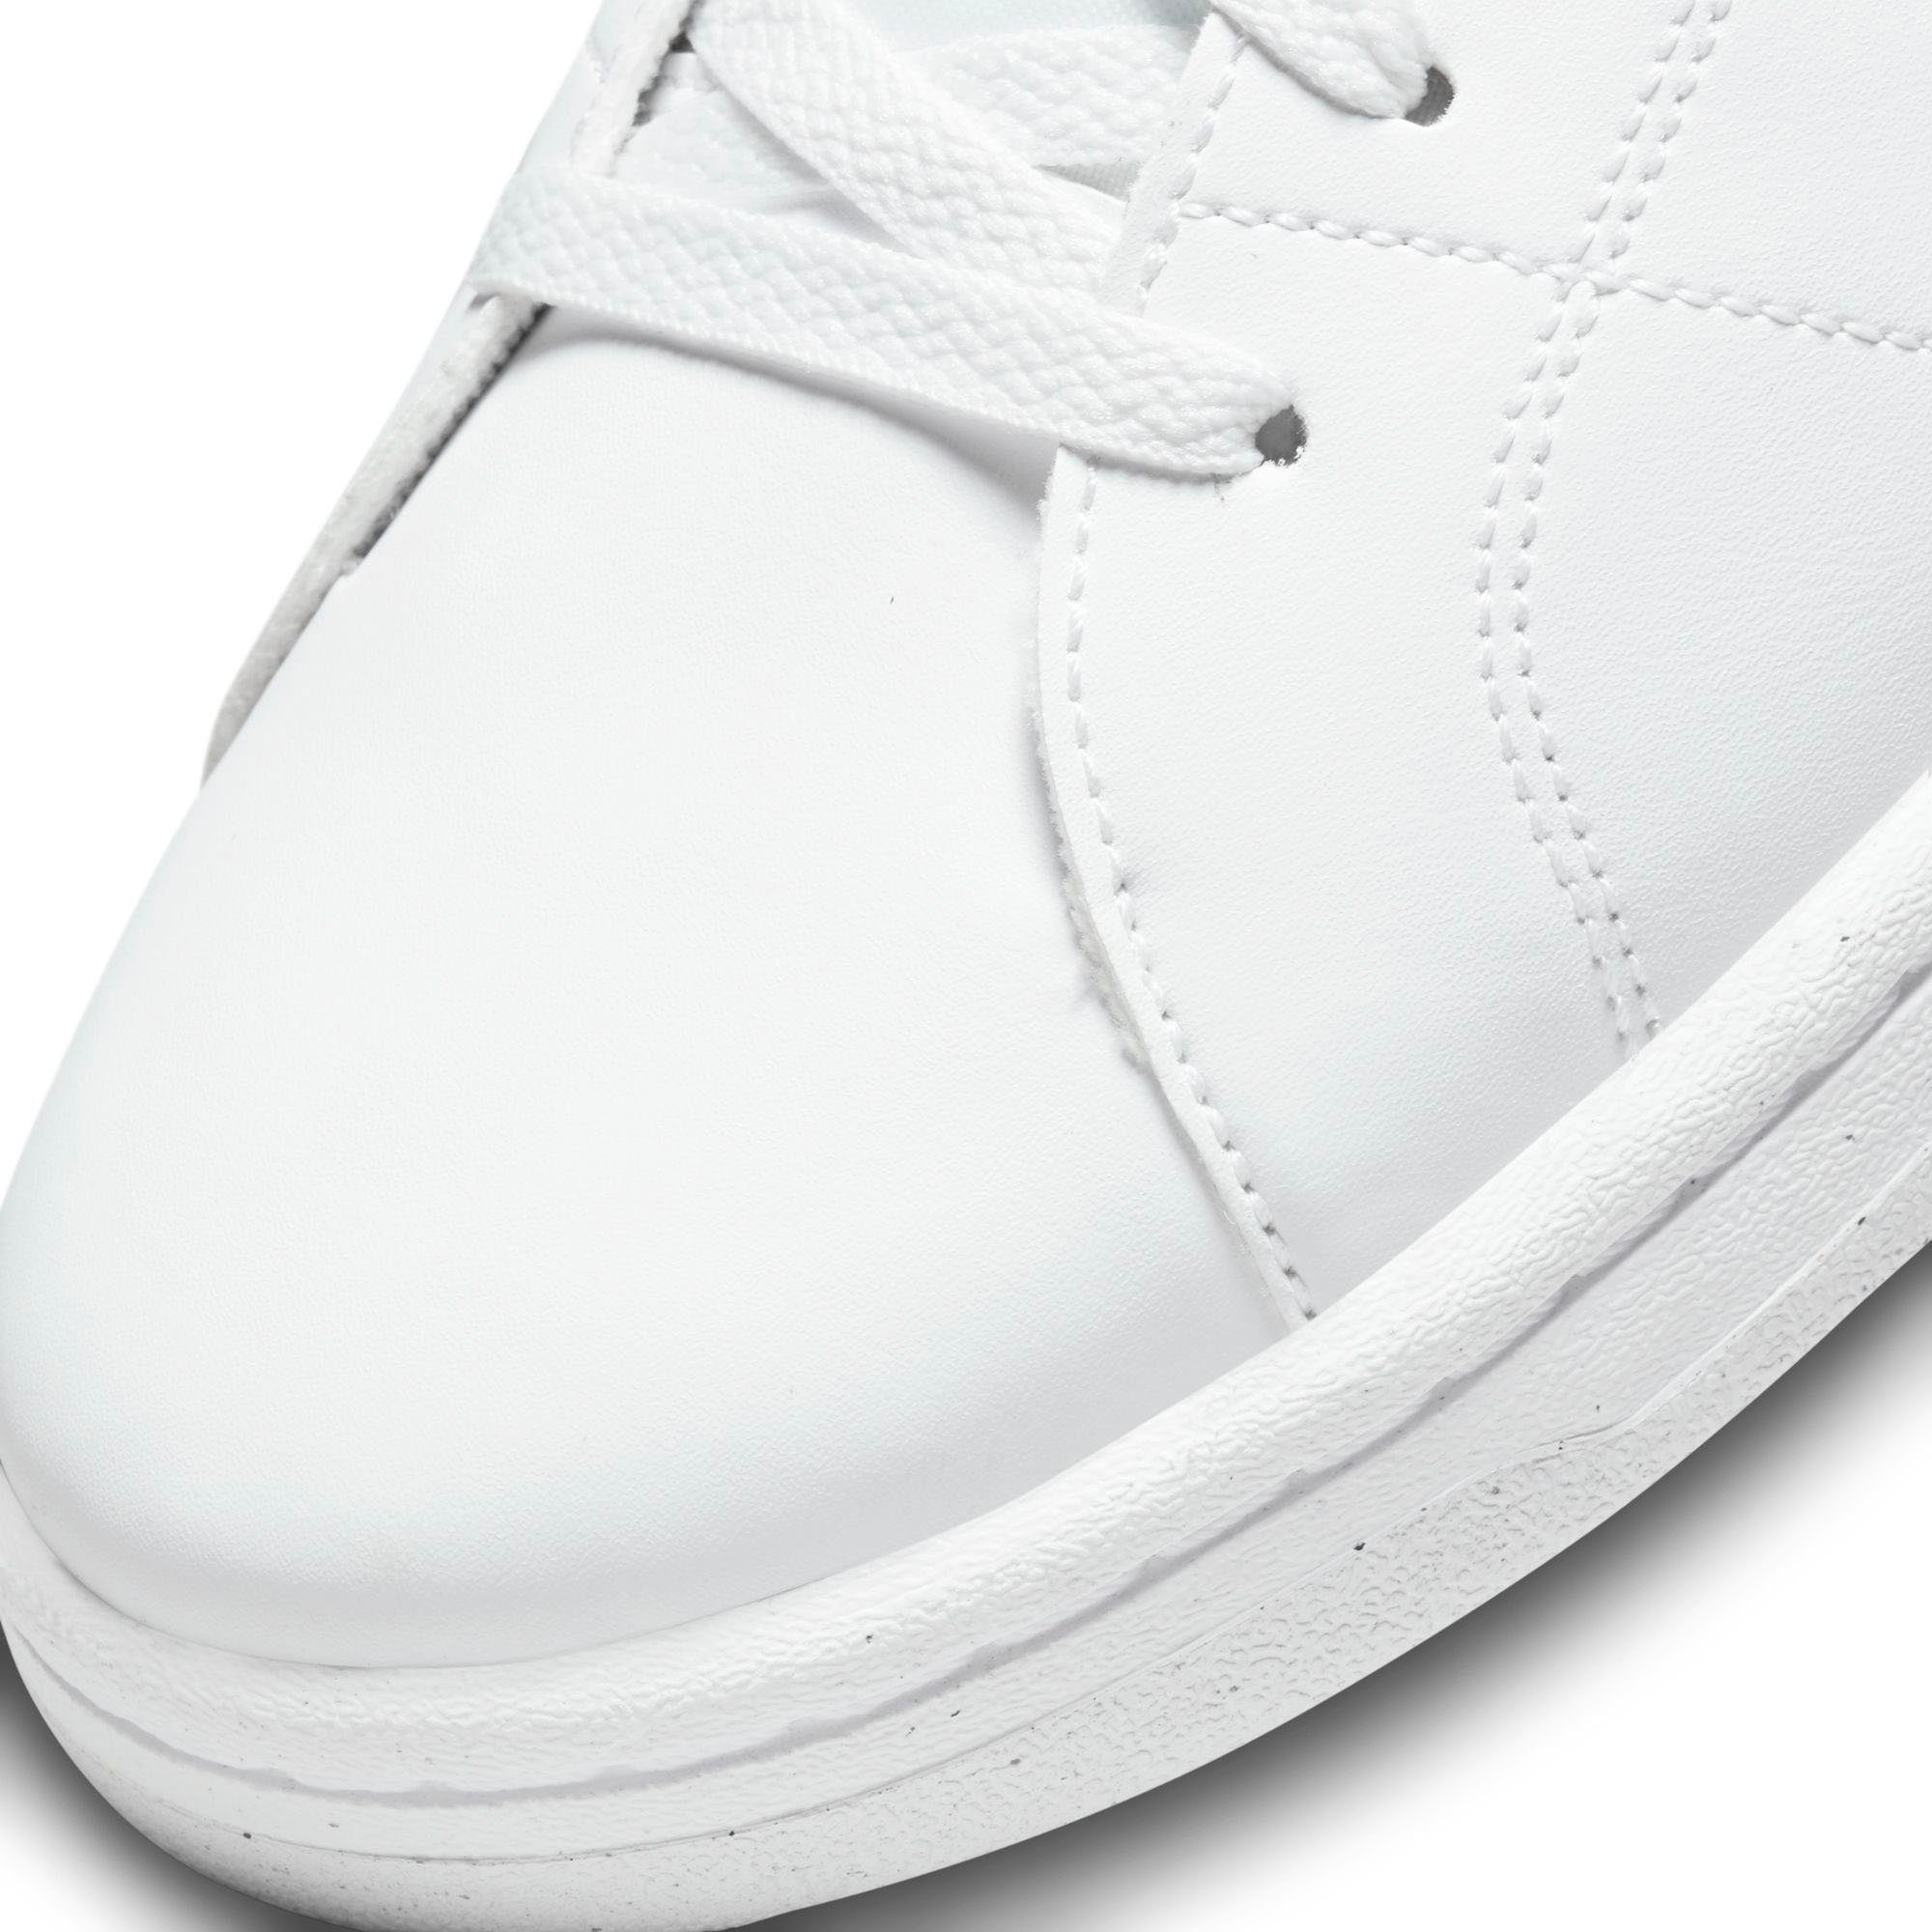 COURT WHITE-LT-PHOTO-BLUE Sneaker Sportswear NATURE ROYALE NEXT Nike 2